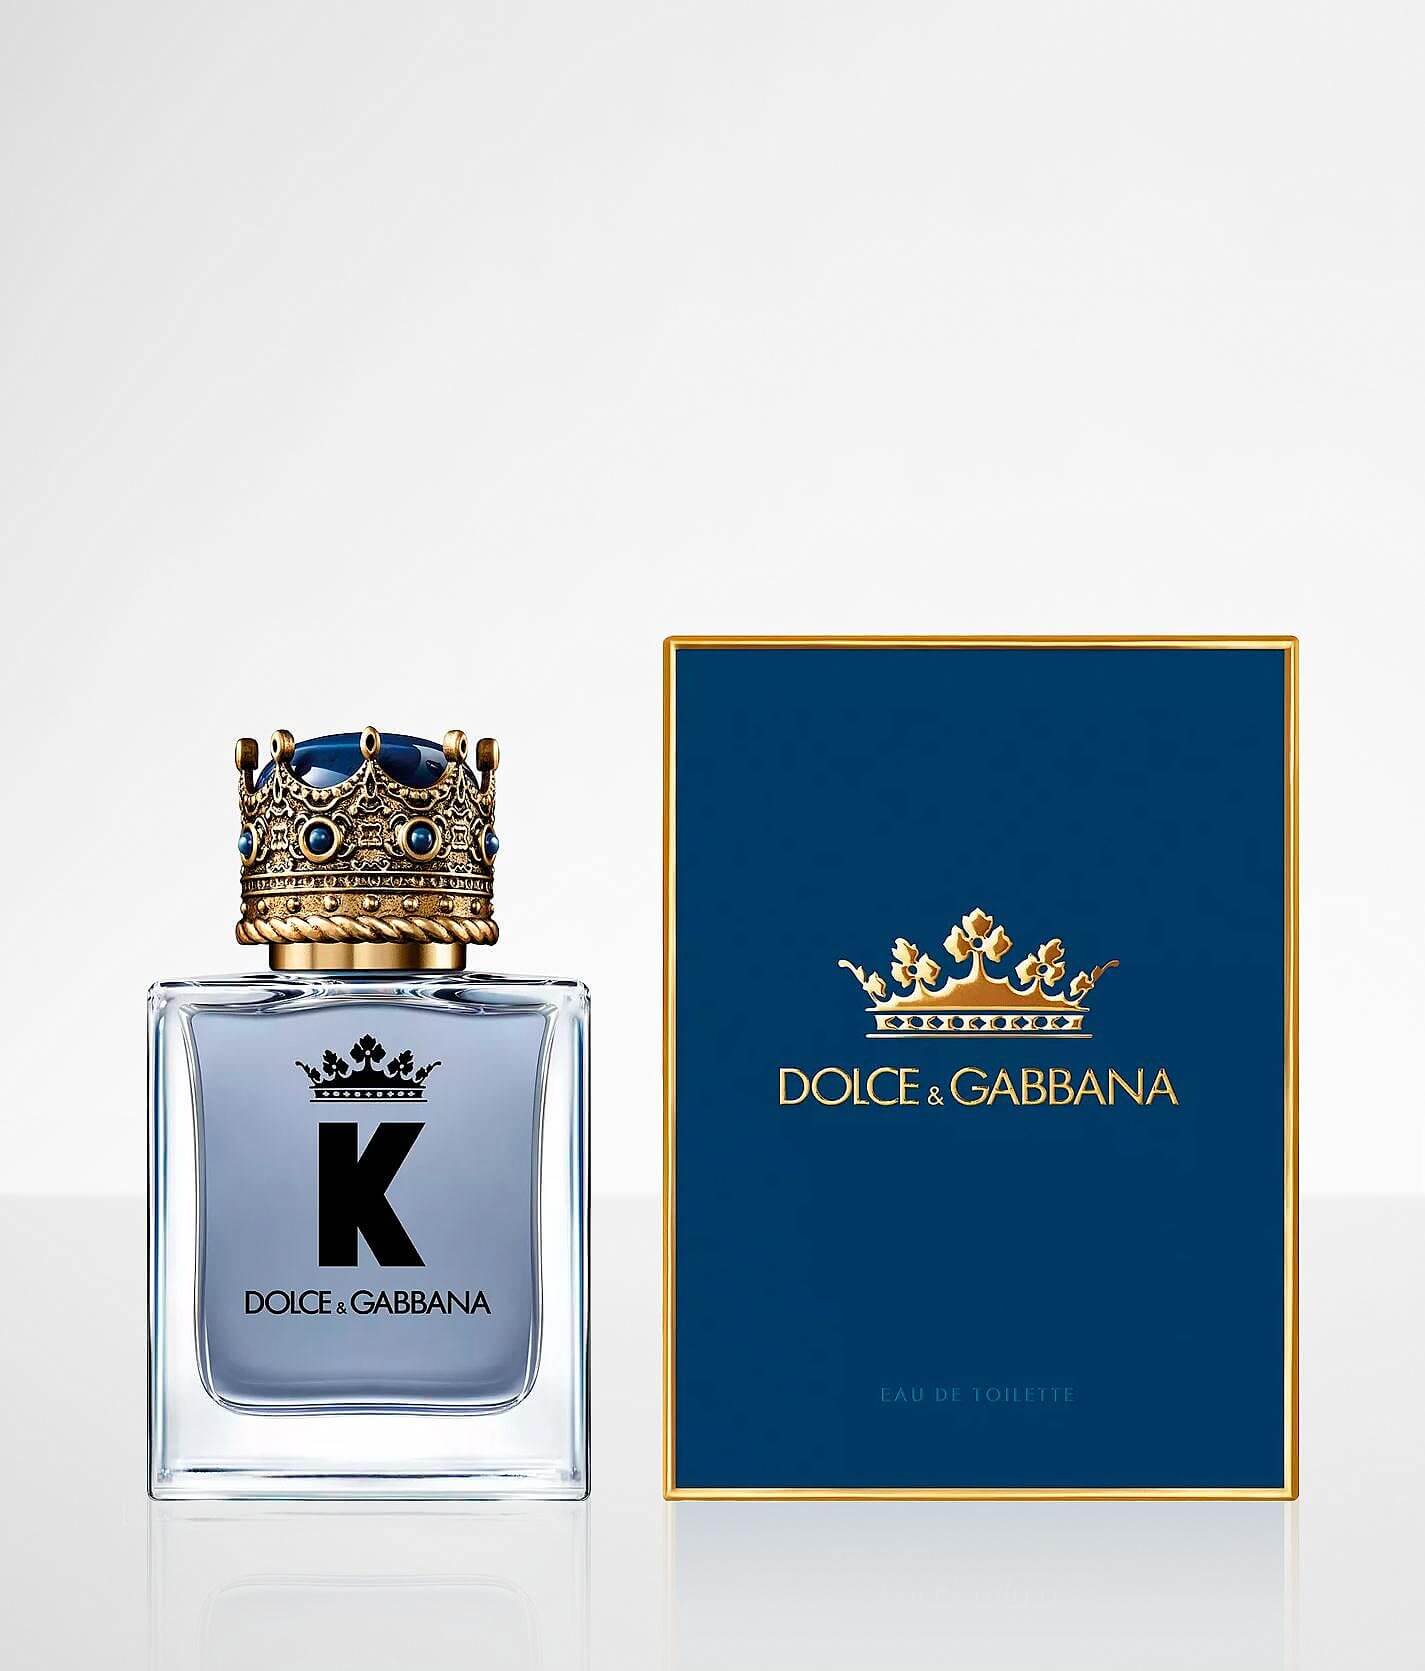 Дольче габбана корона цена. Духи Dolce Gabbana King. Dolce & Gabbana k m EDT 50 ml. Dolce Gabbana духи мужские King. Dolce and Gabbana King 50 ml.